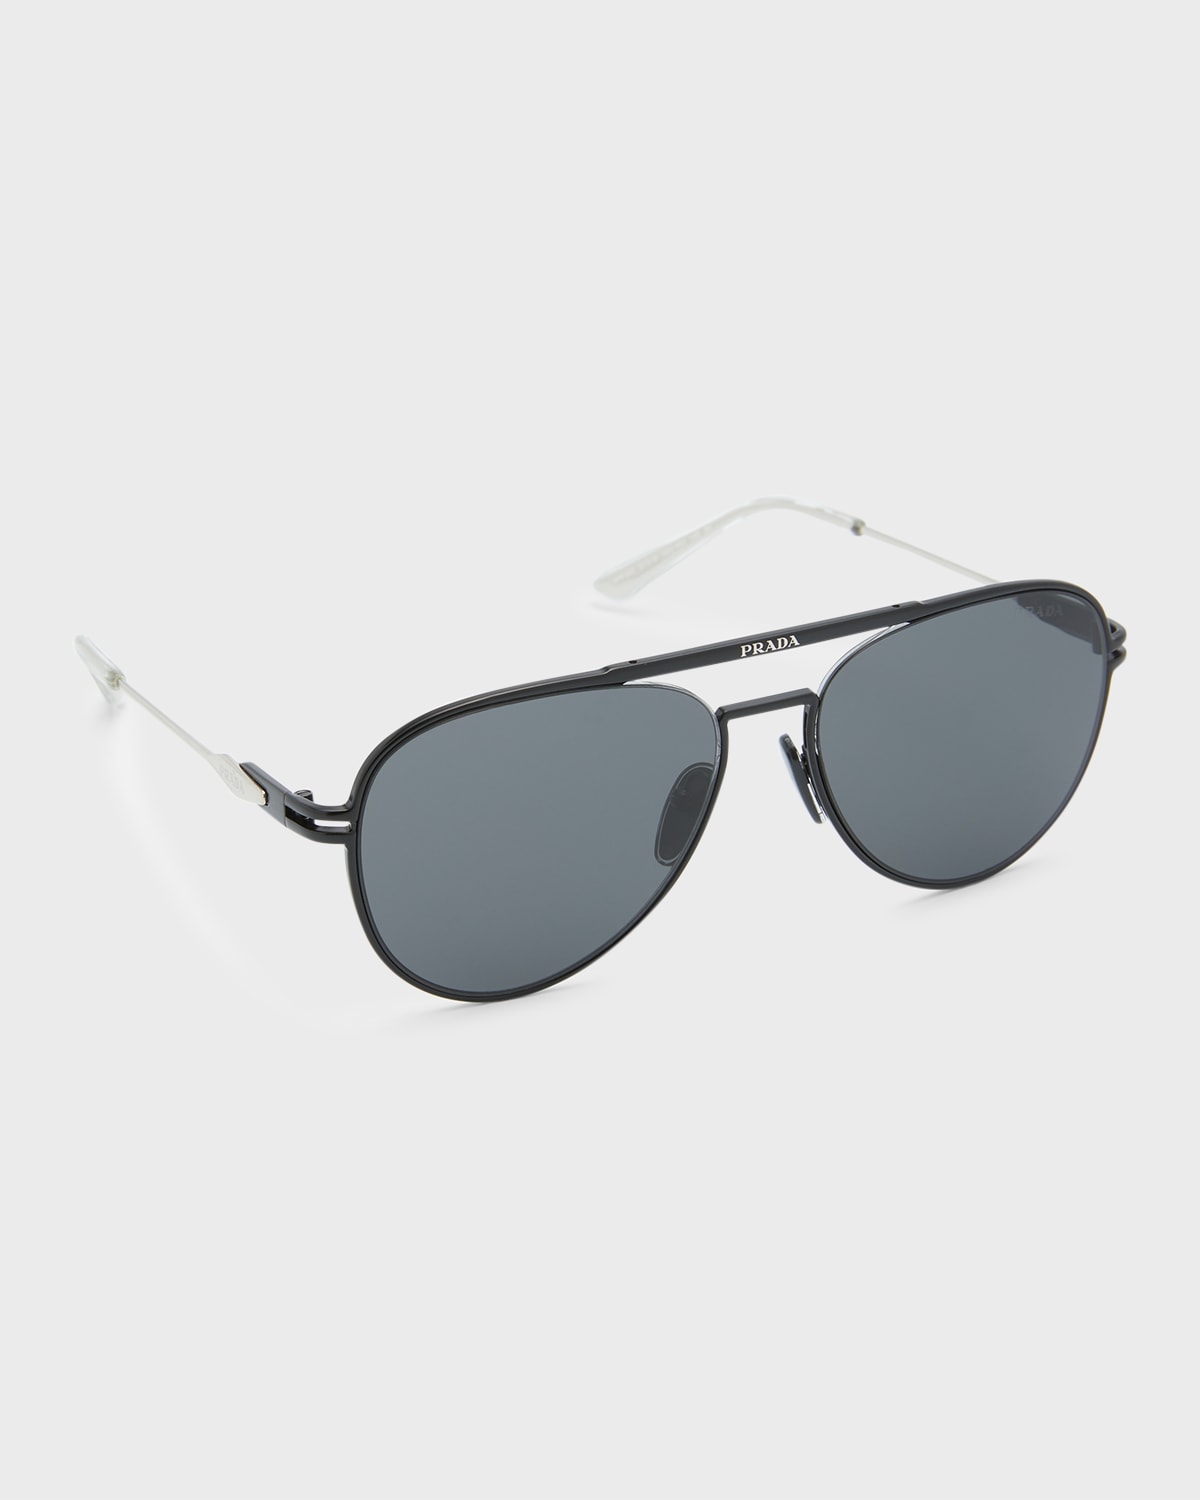 Double Bridge Sunglasses | Neiman Marcus